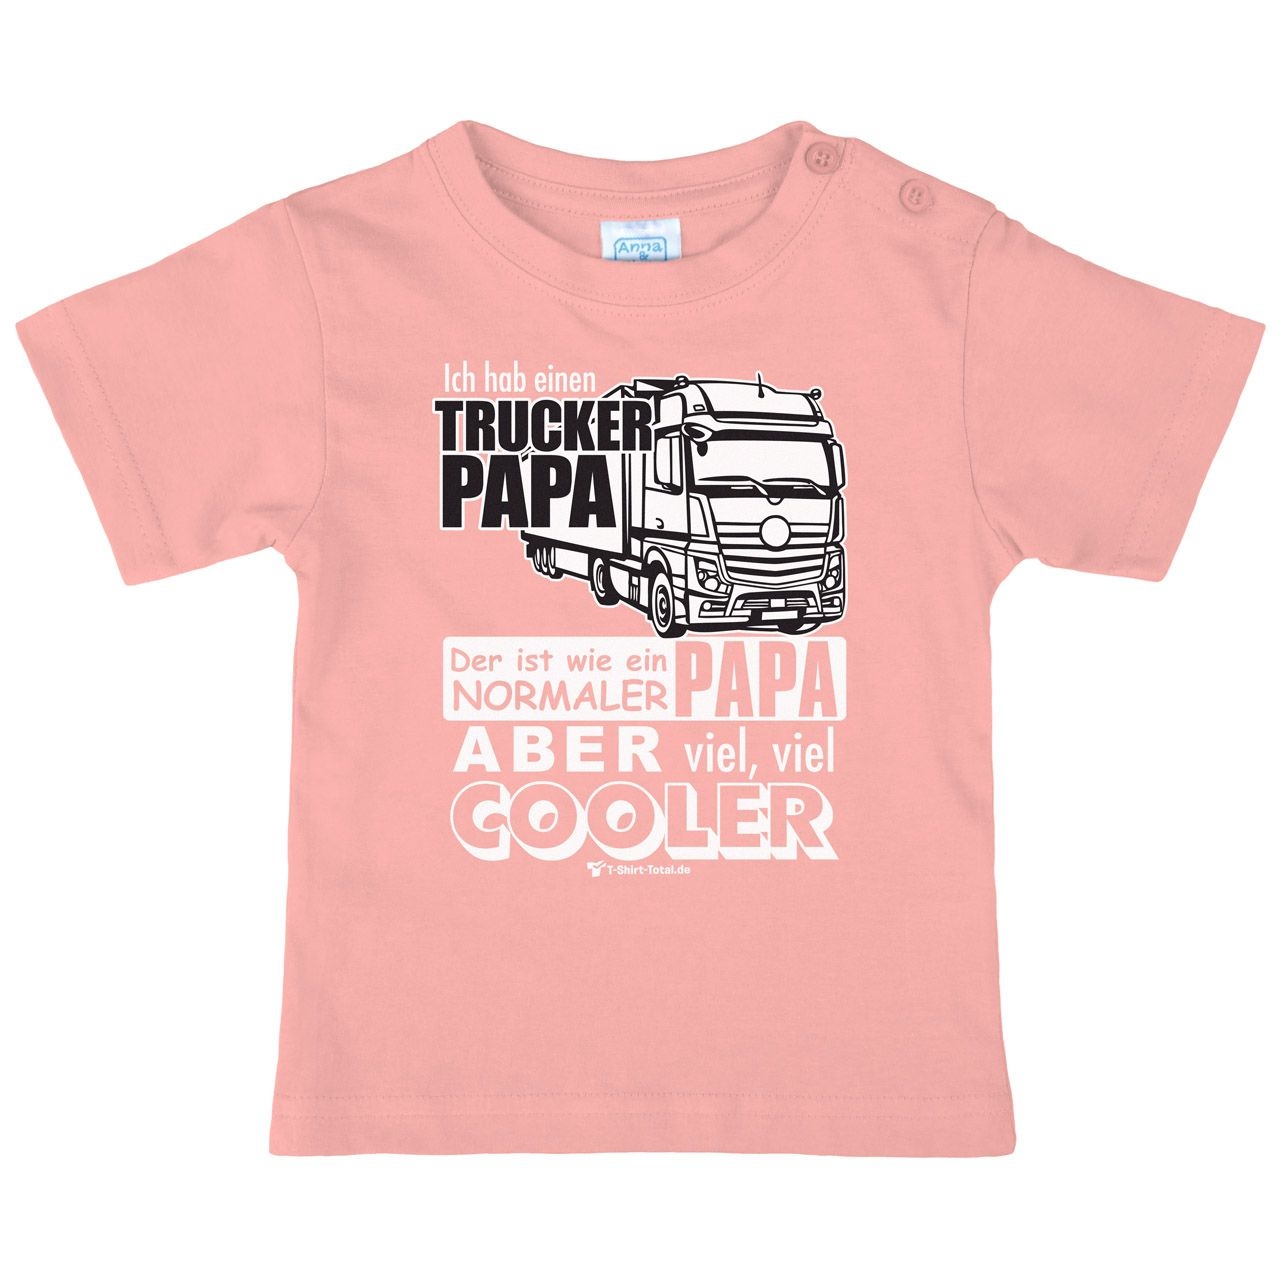 Trucker Papa Kinder T-Shirt rosa 68 / 74